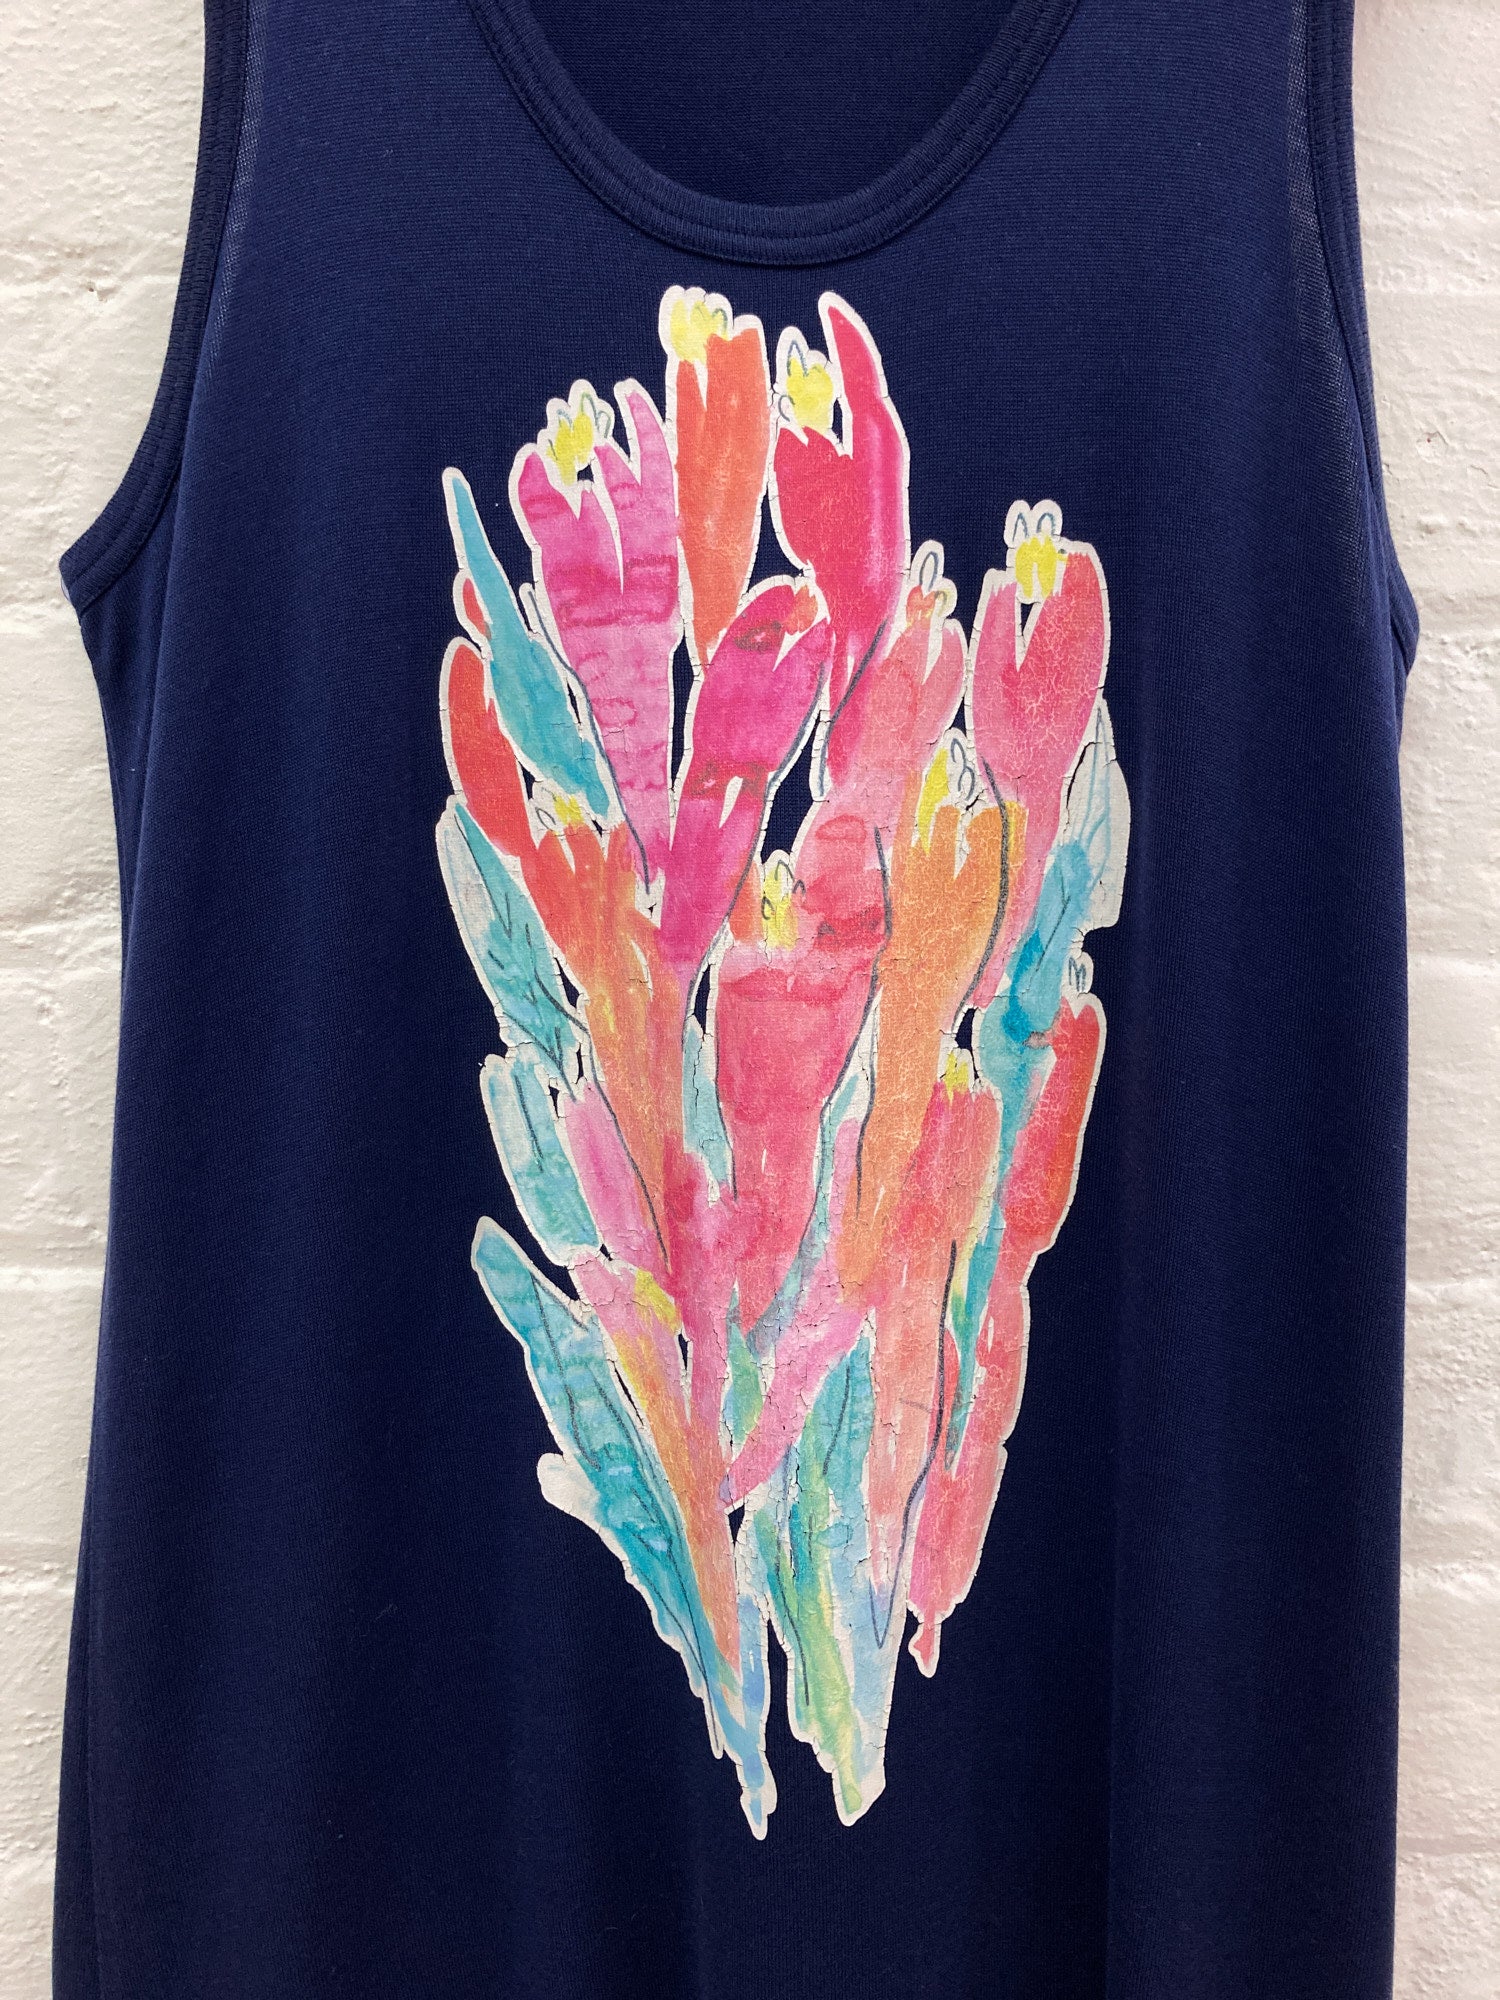 Comme des Garcons SS1996 blue cotton flower print sleeveless dress - S